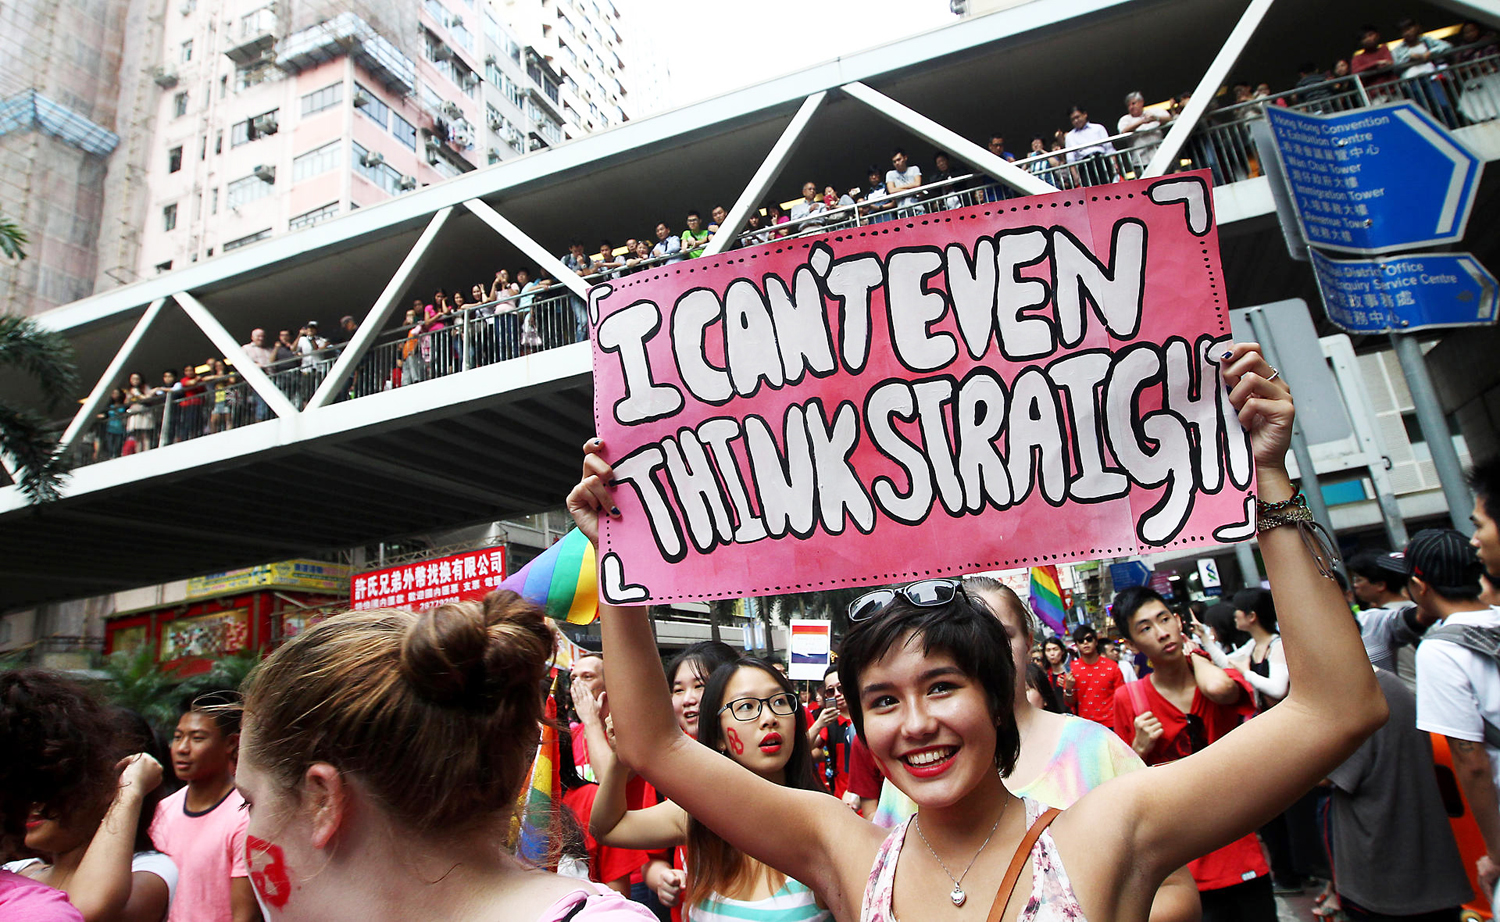 Gay people often encounter discrimination. Photo: Jonathan Wong